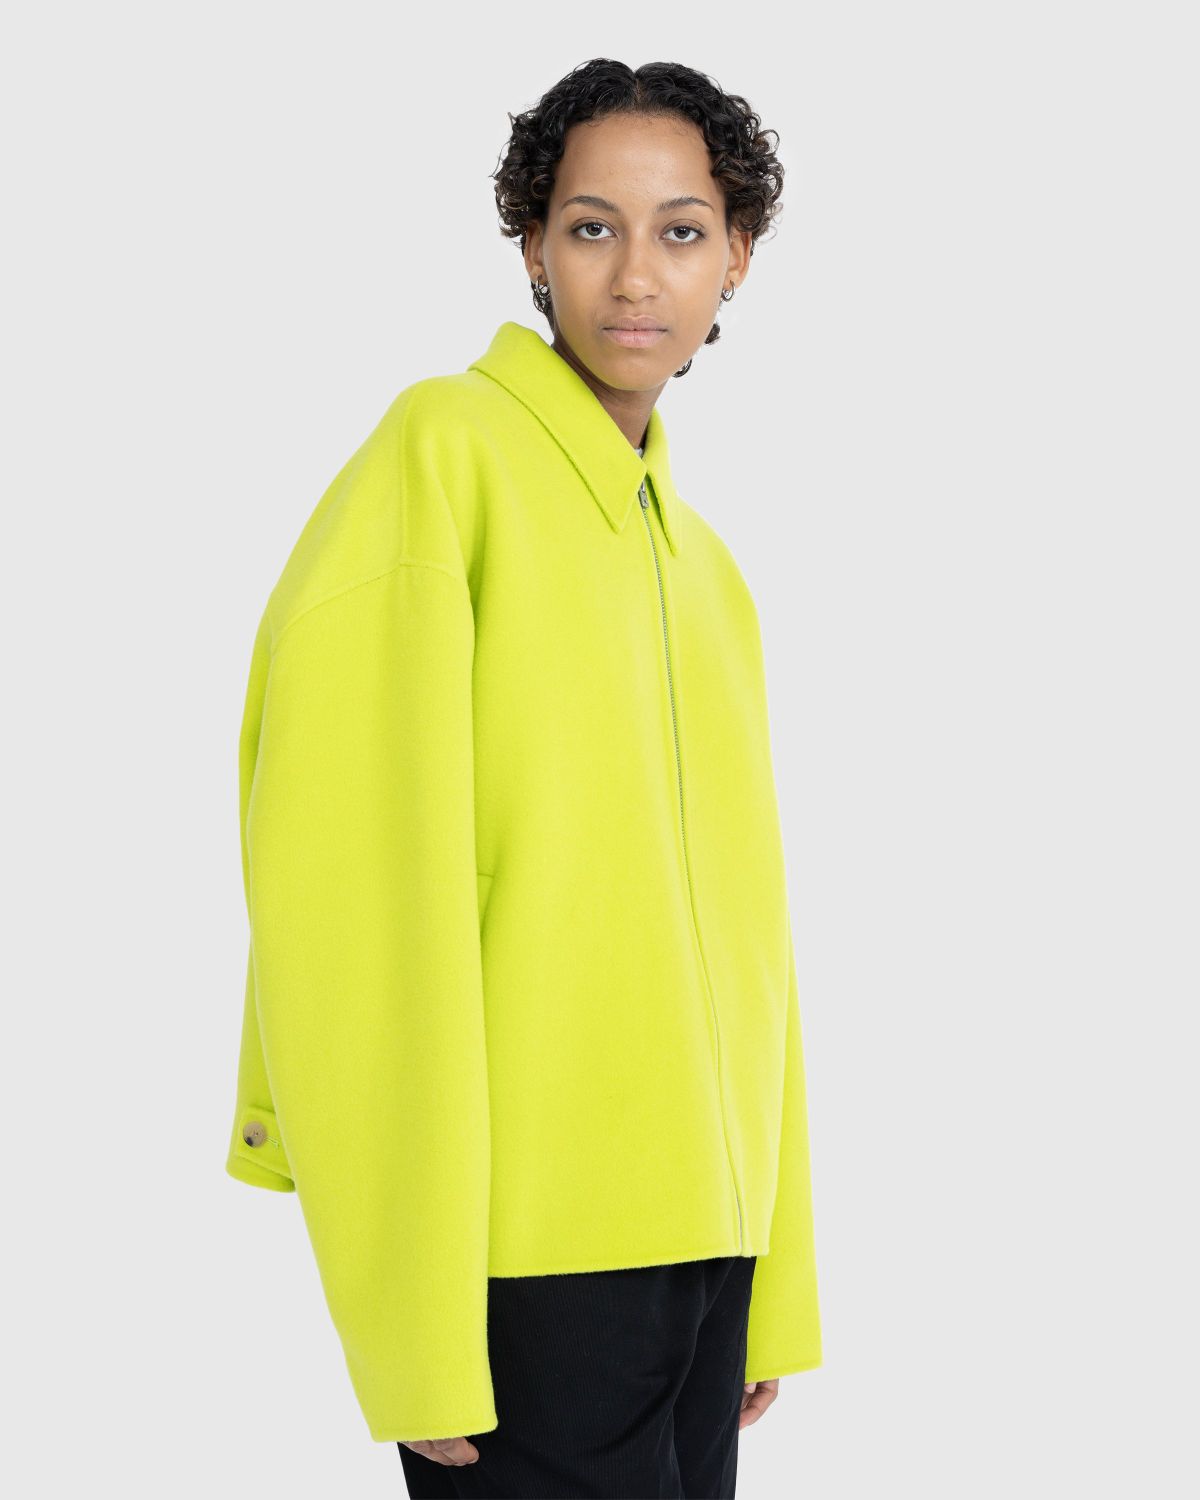 Acne Studios – Wool Zipper Jacket Lime Green - Jackets - Green - Image 4